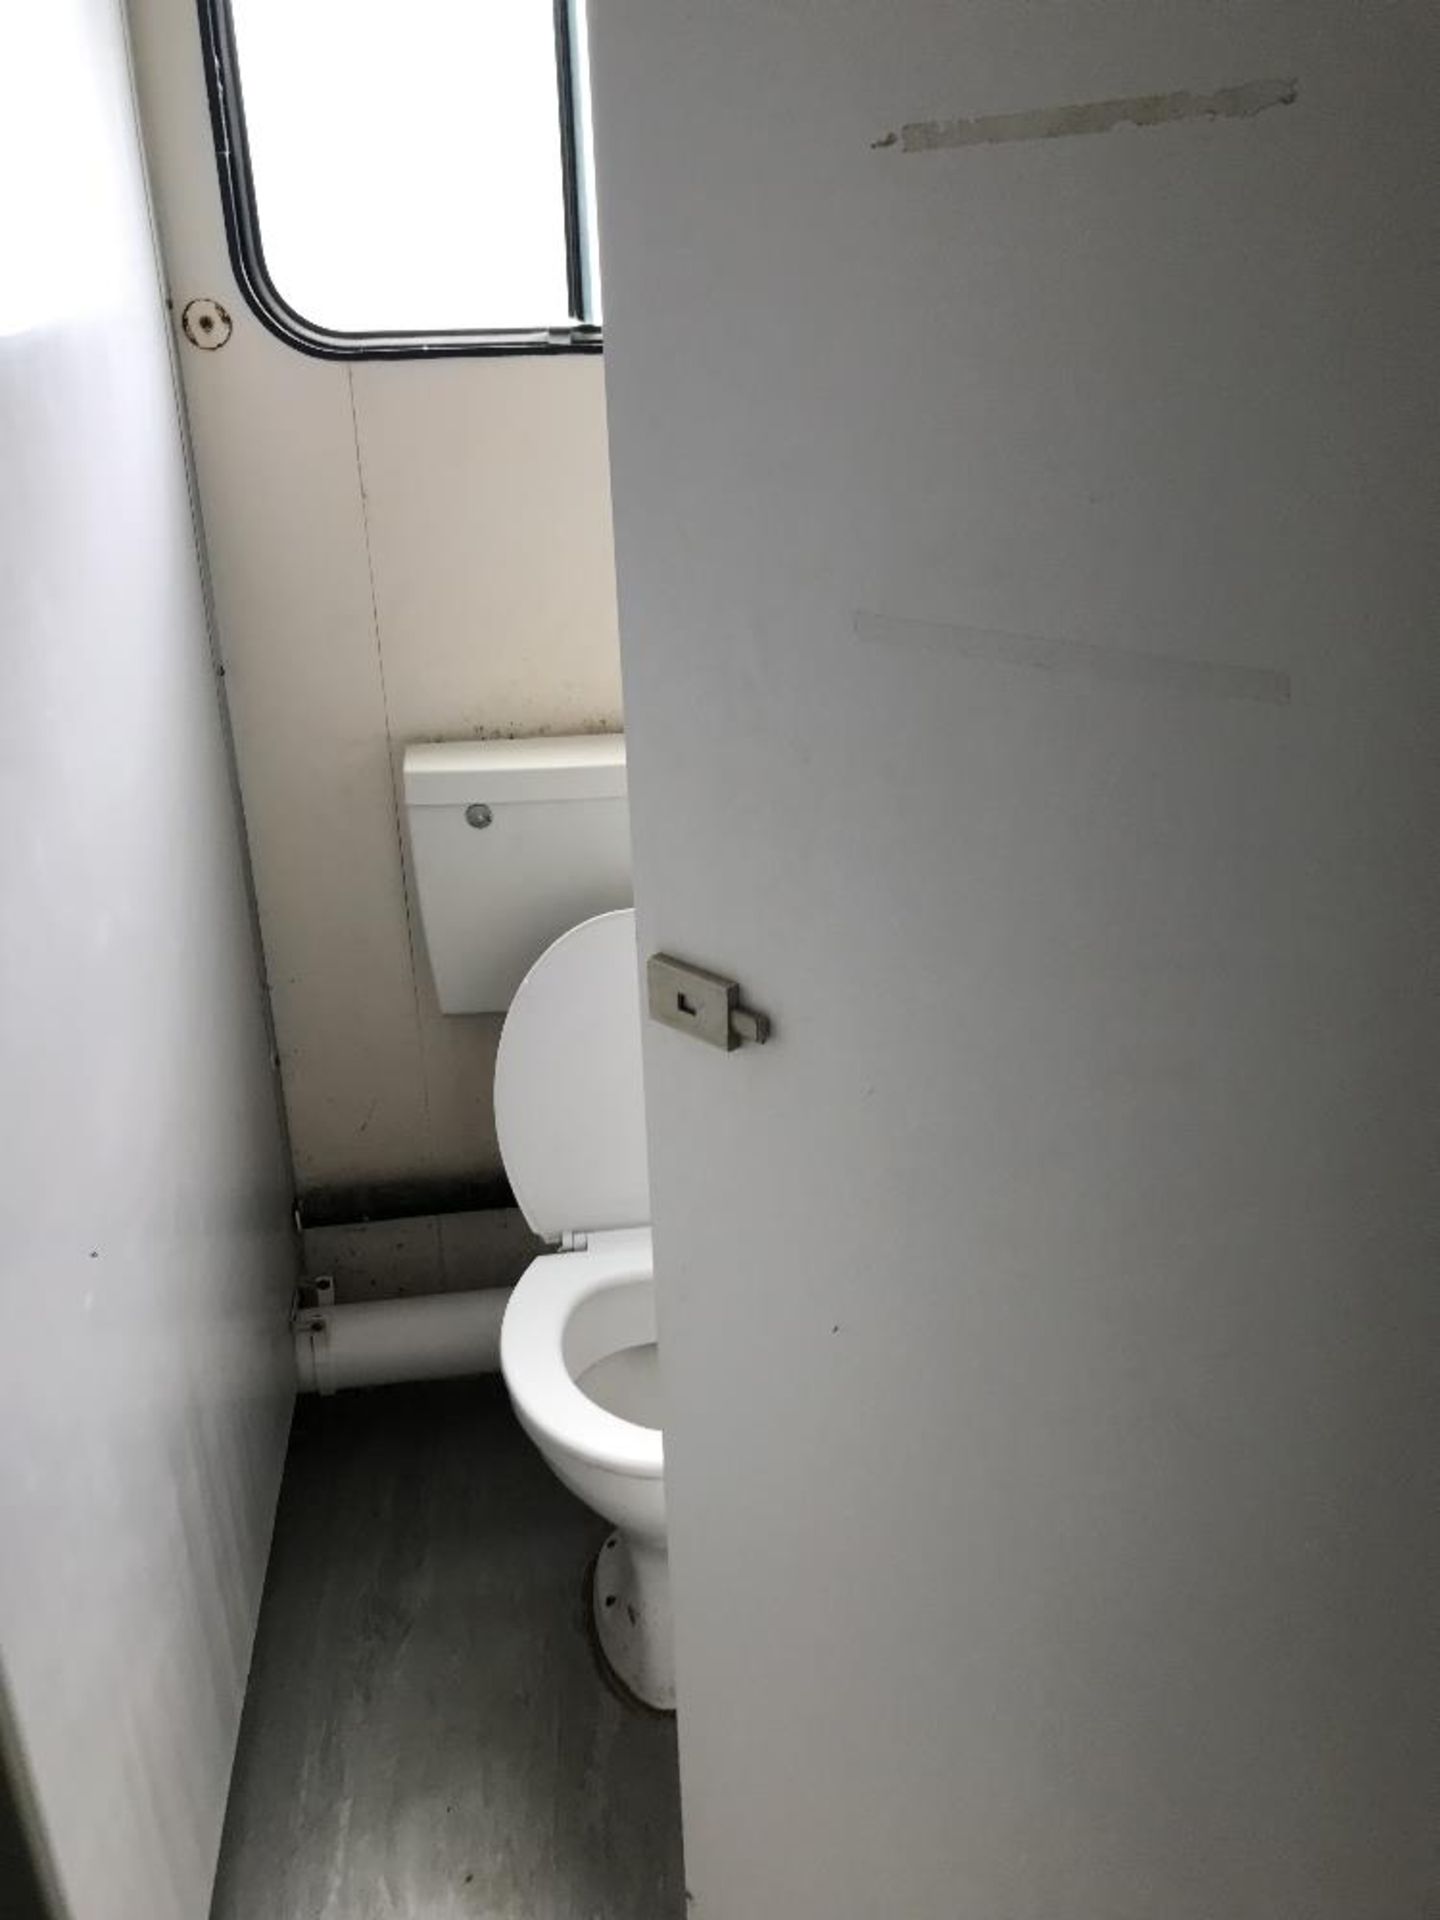 Portacabin jack legged staff toilet unit - Image 7 of 12